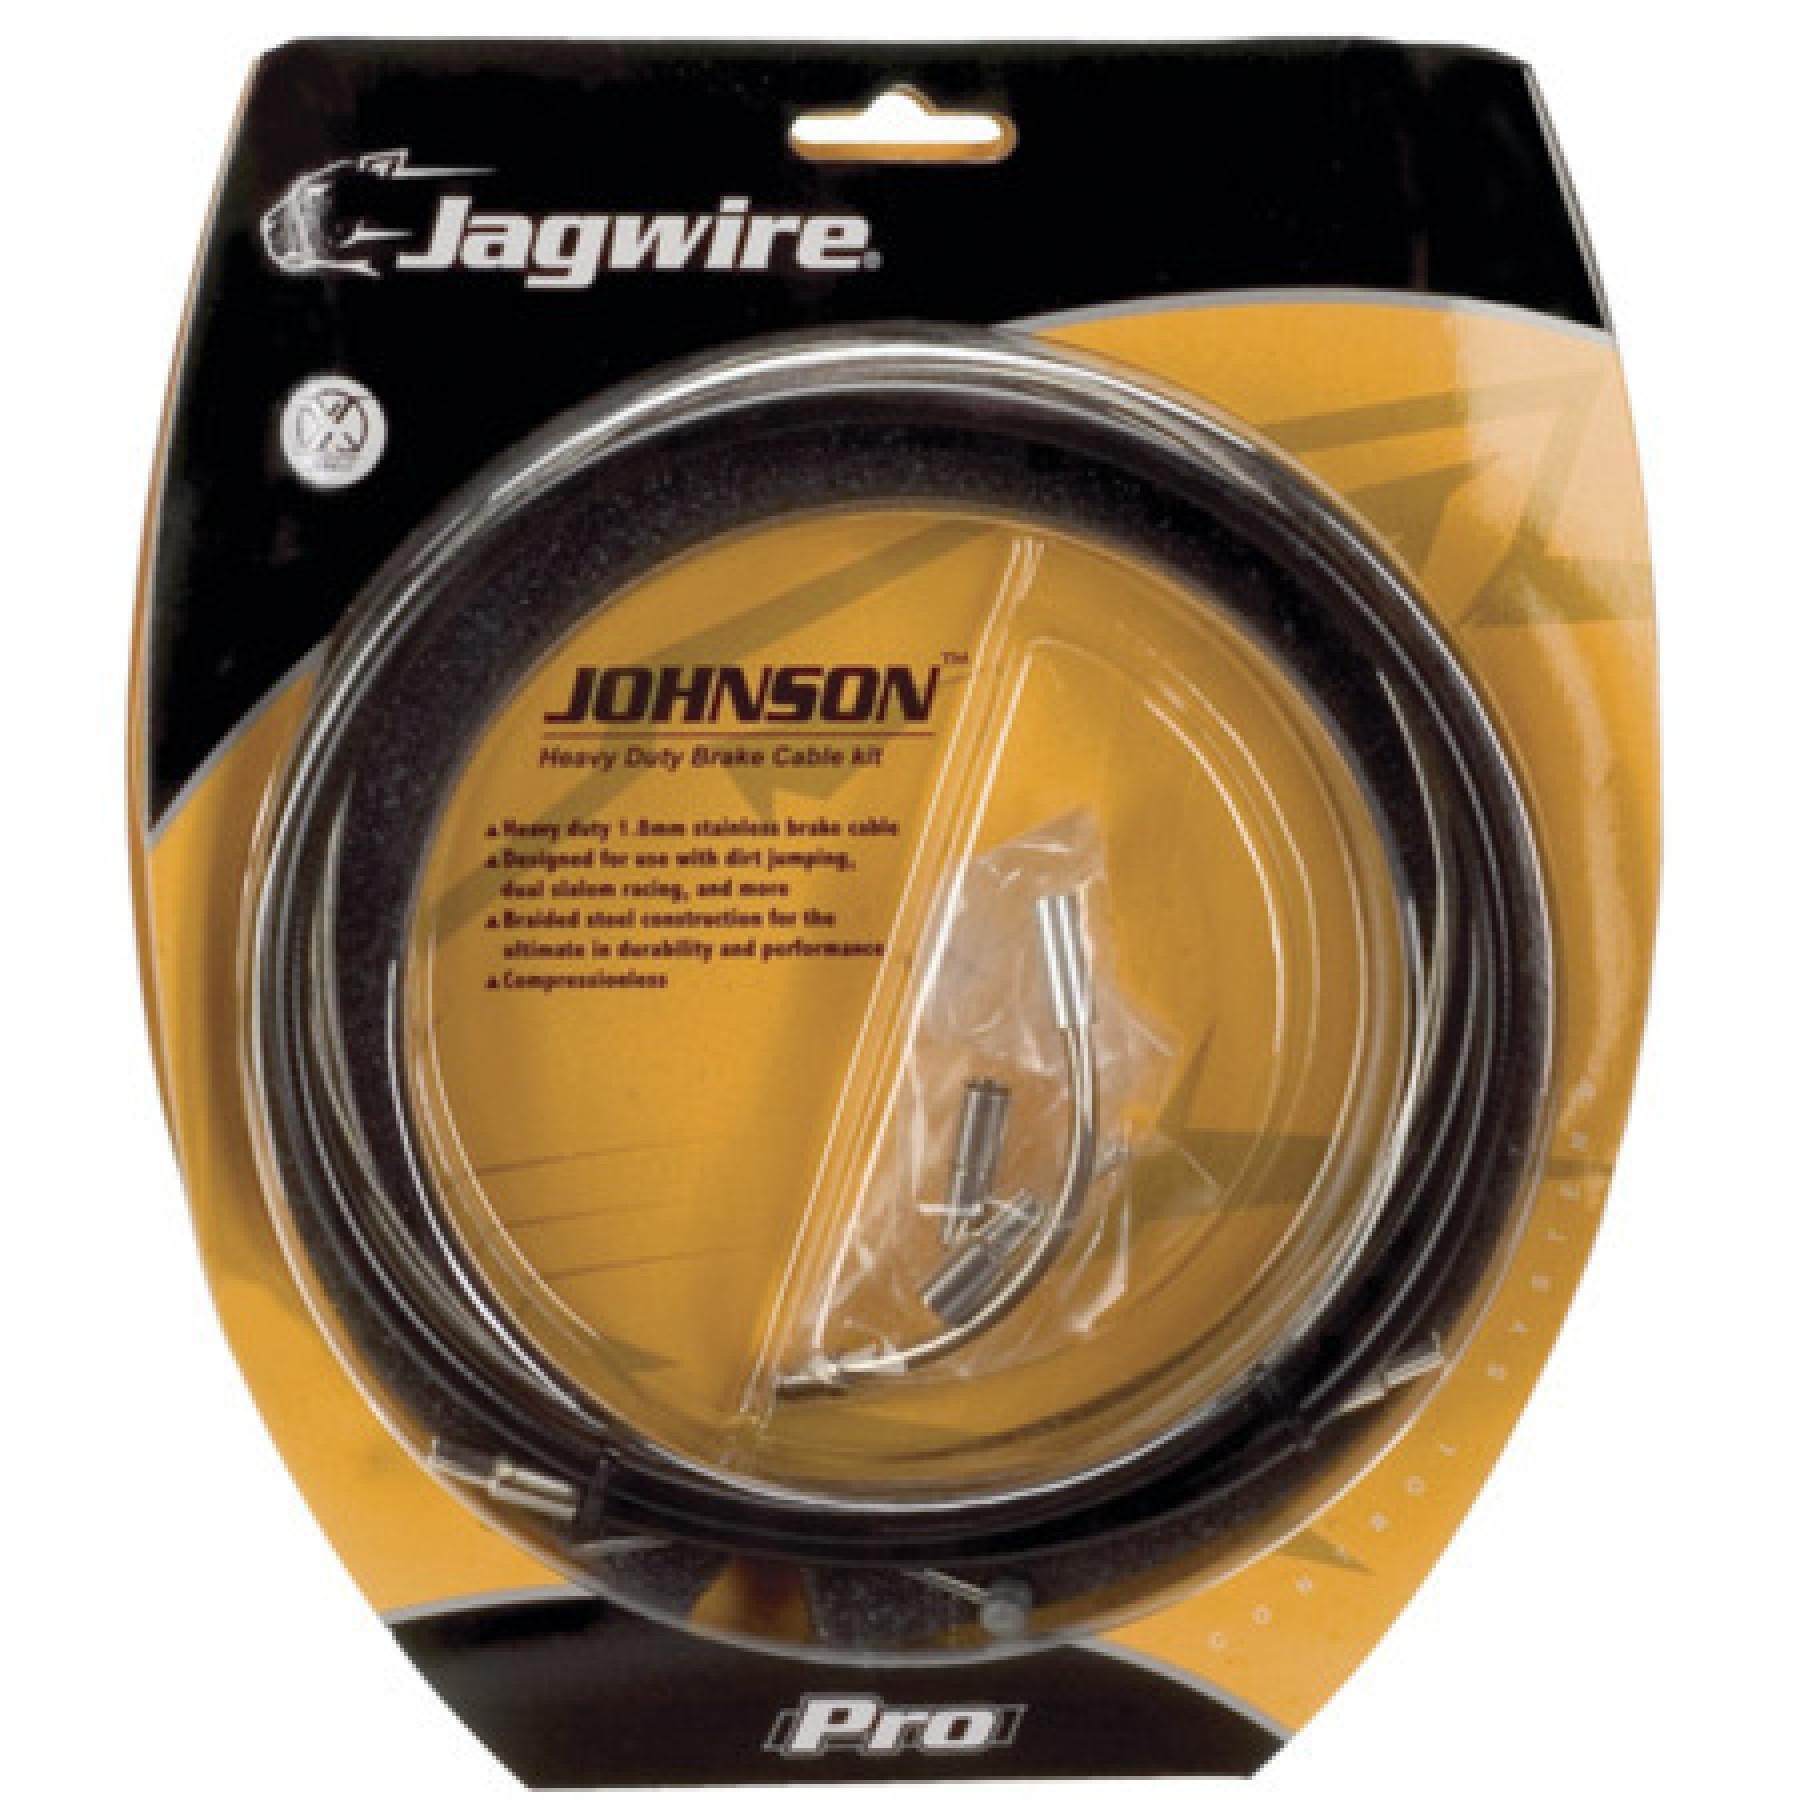 Broms kabel Jagwire Johnson Heavy-Duty -Braided Steel